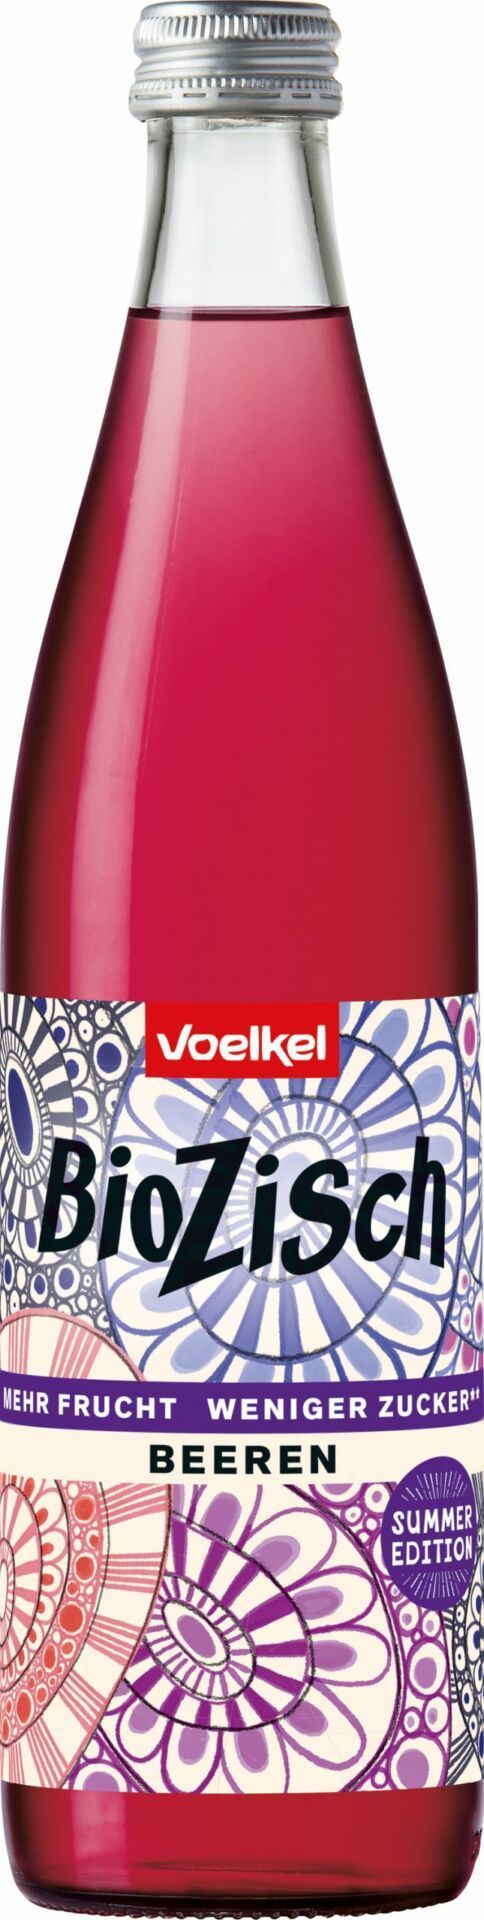 Voelkel BioZisch Summer Edition Beeren 10 x 0,5l